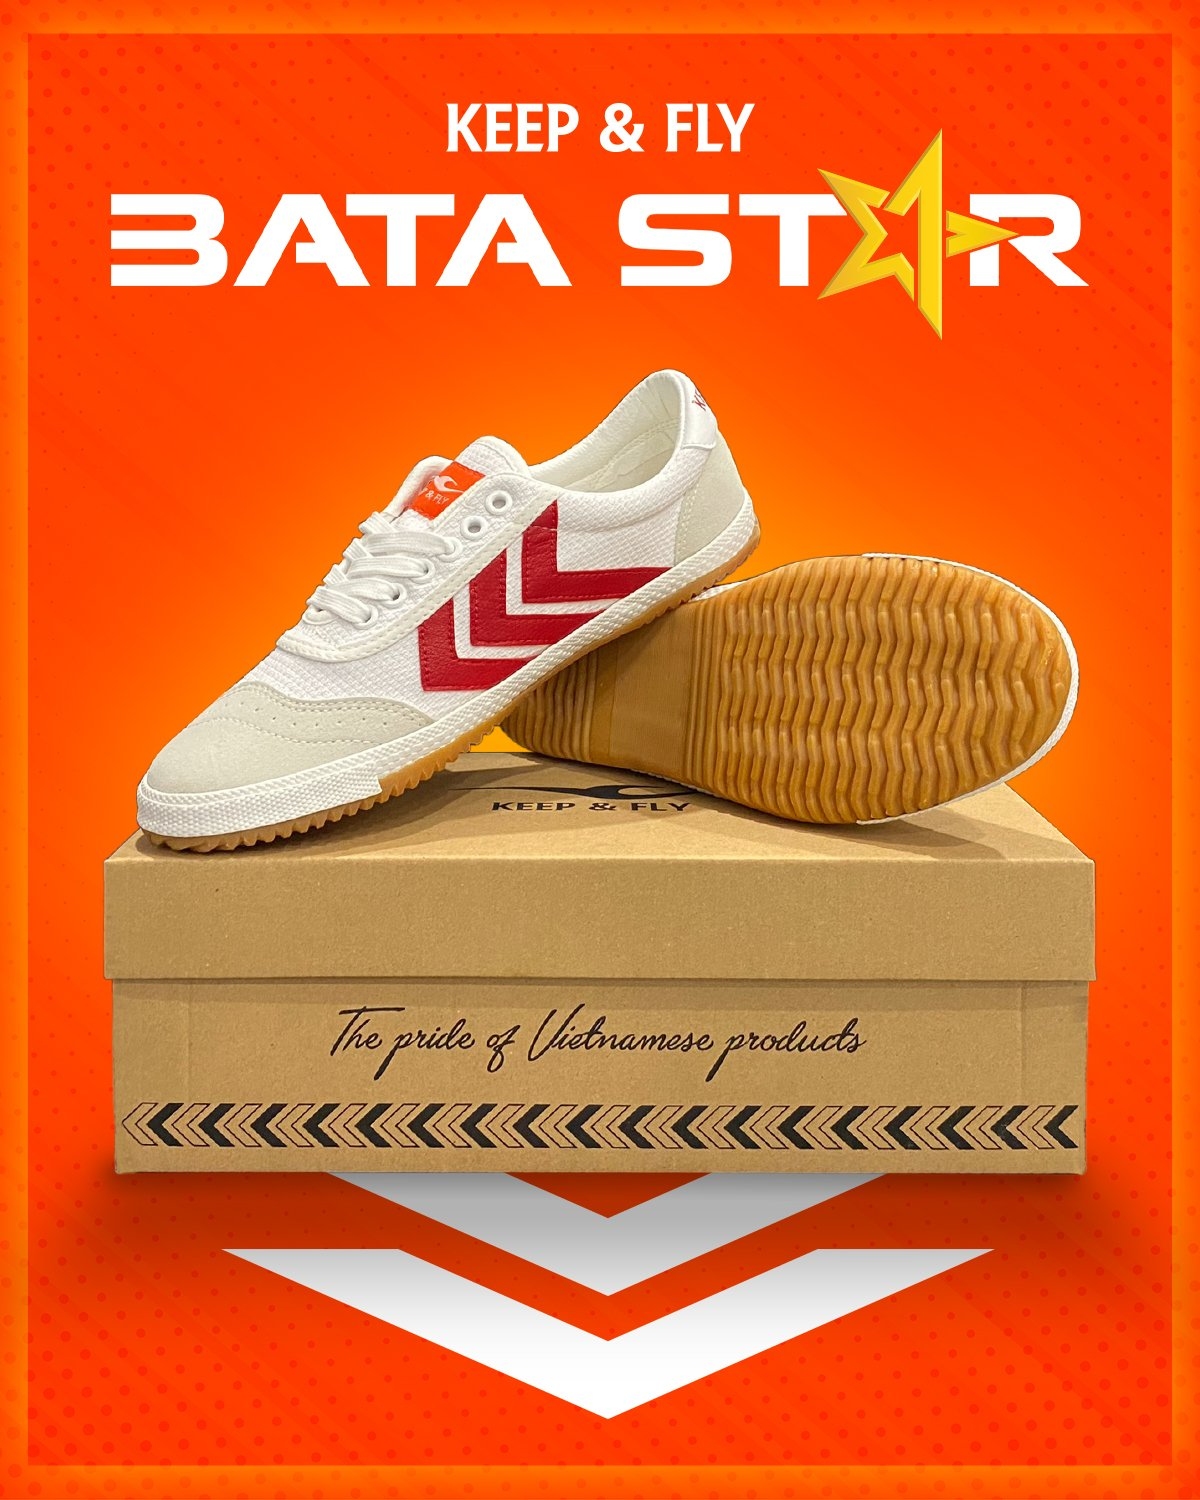 Bata star Keep & fly shoes